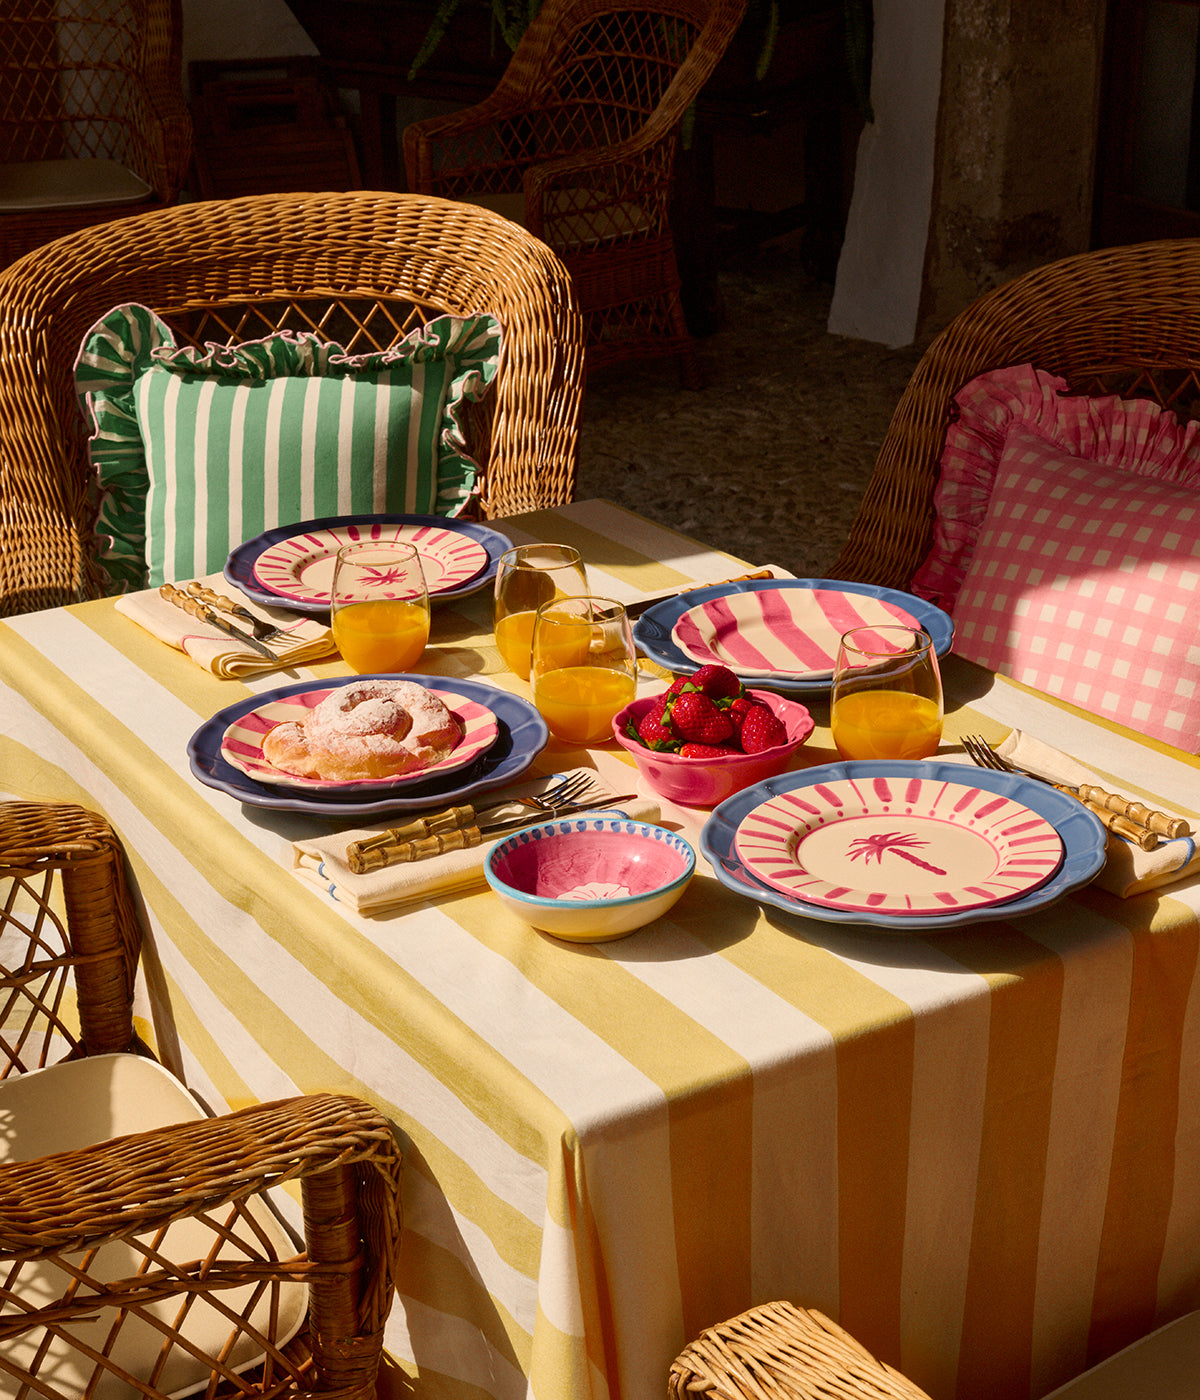 Breton tablecloth - Yellow